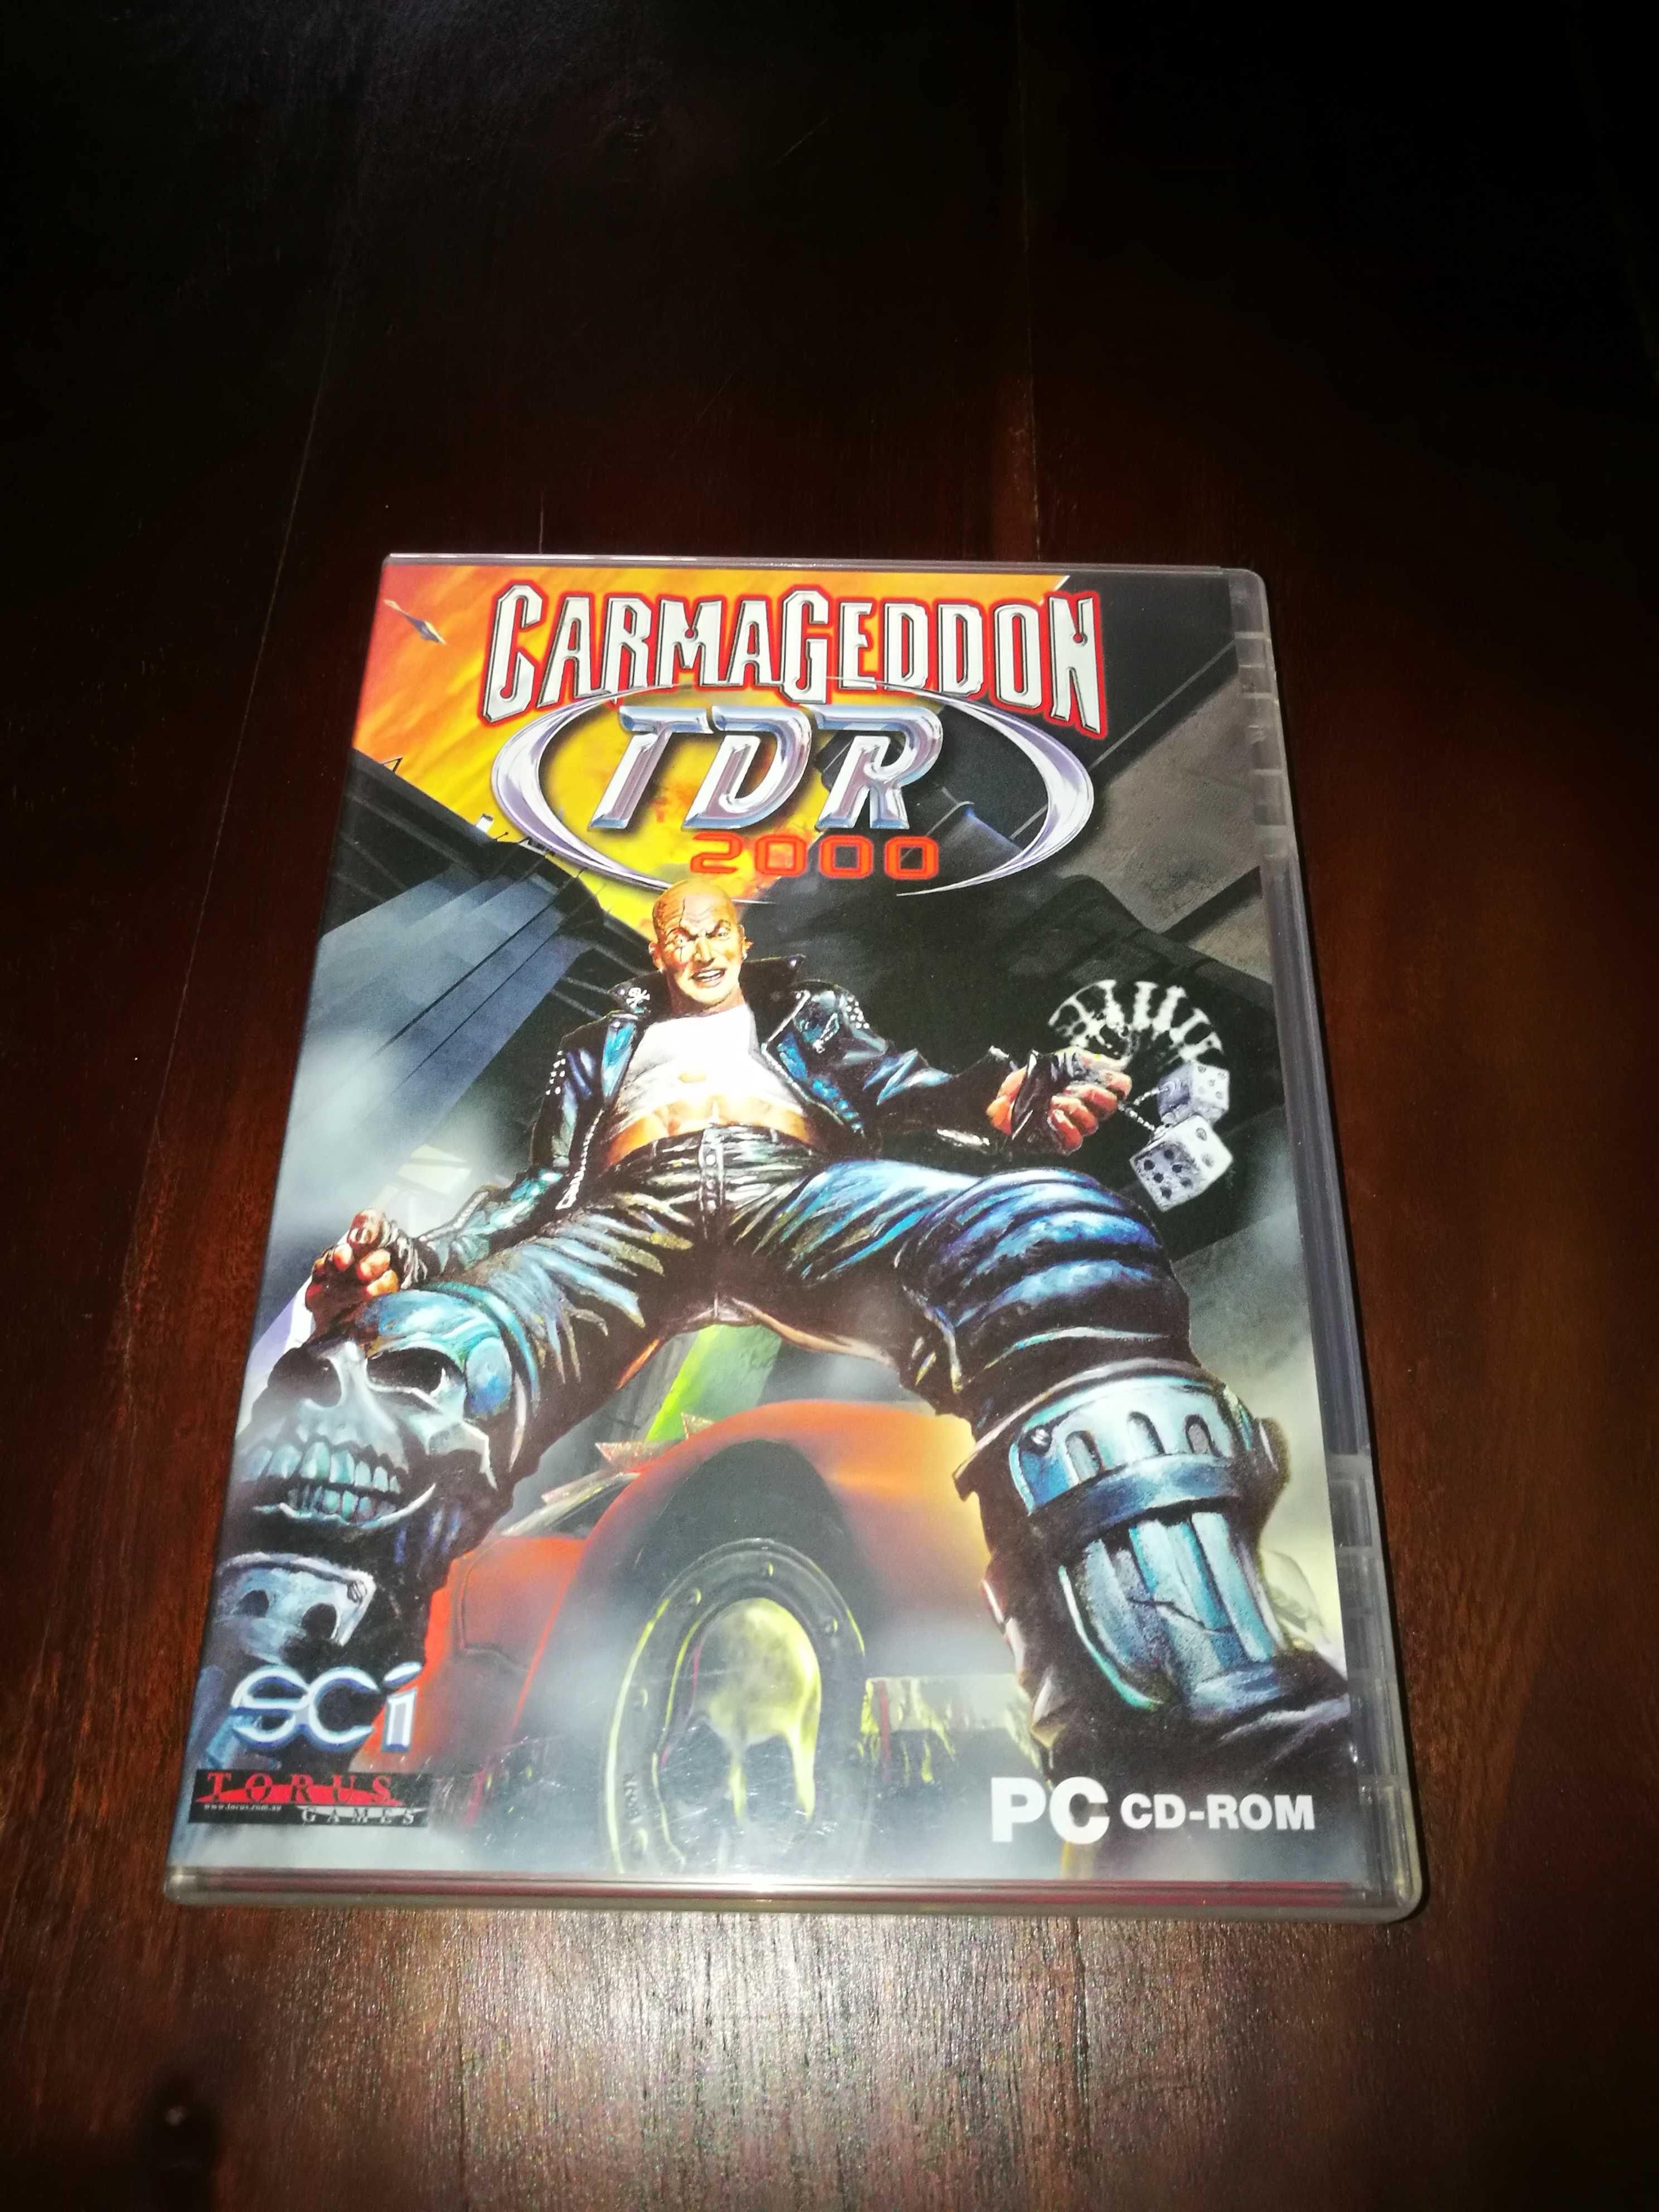 Carmagedon TDR 2000 (PC CD-ROOM)